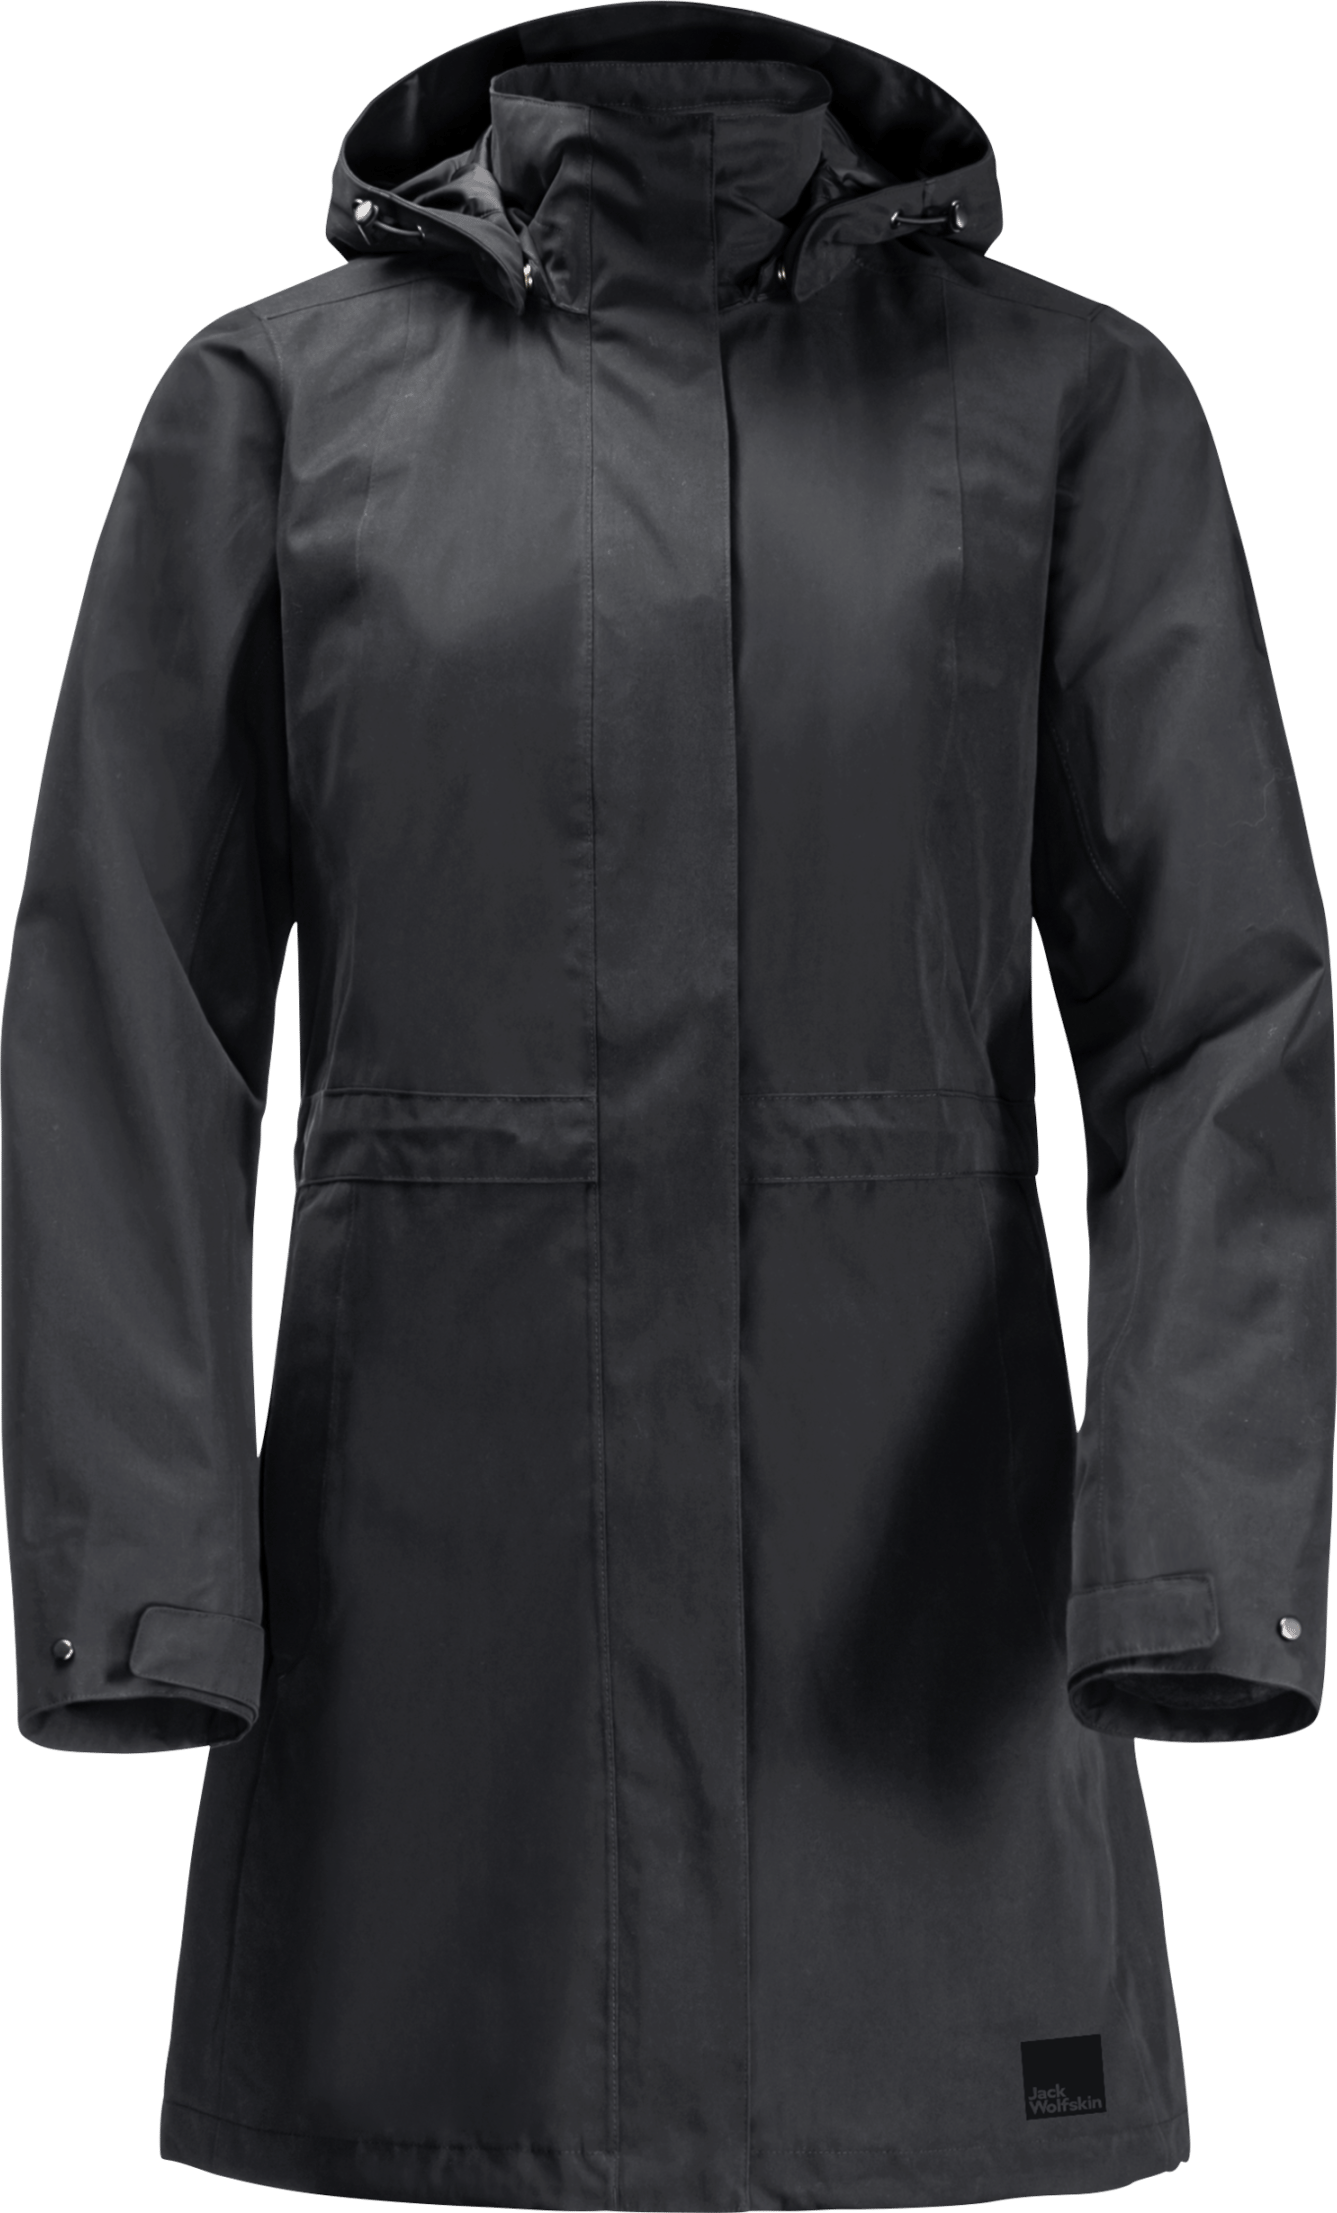 Women's Ottawa Coat Black